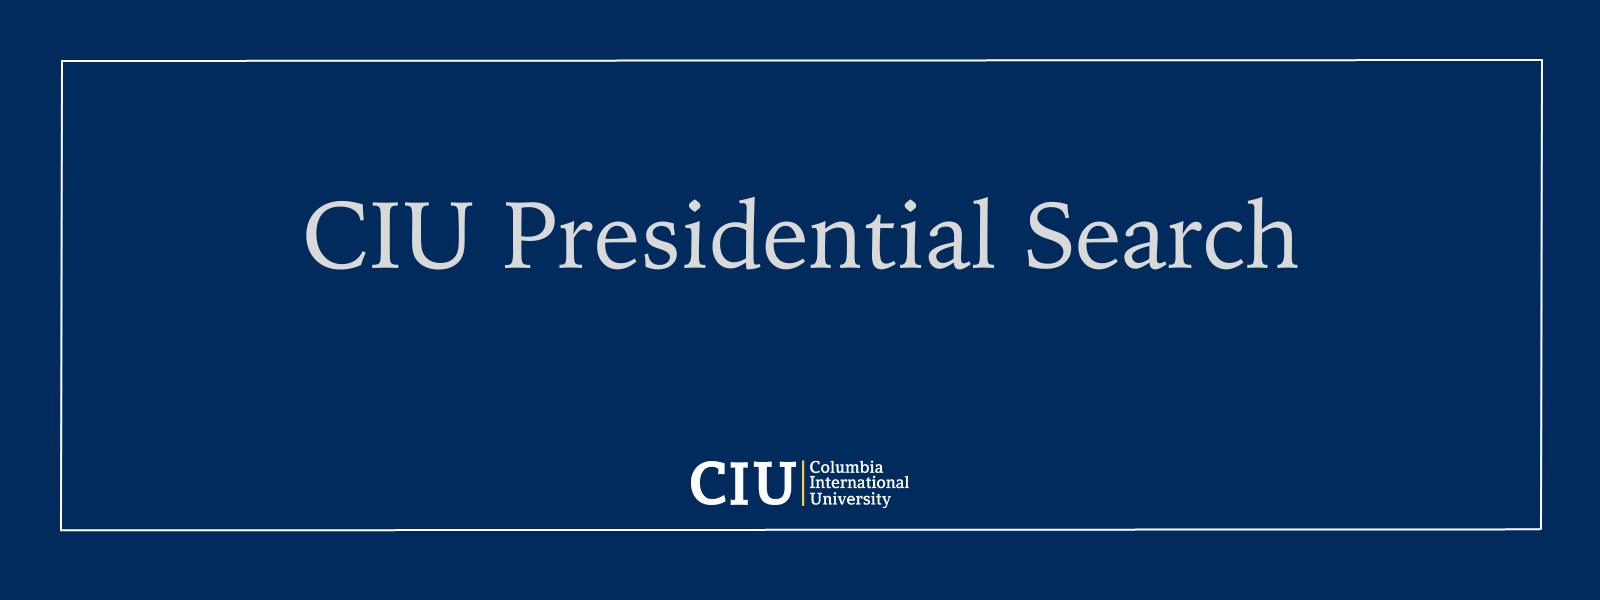 Blue box with CIU logo and text: CIU Presidential Search